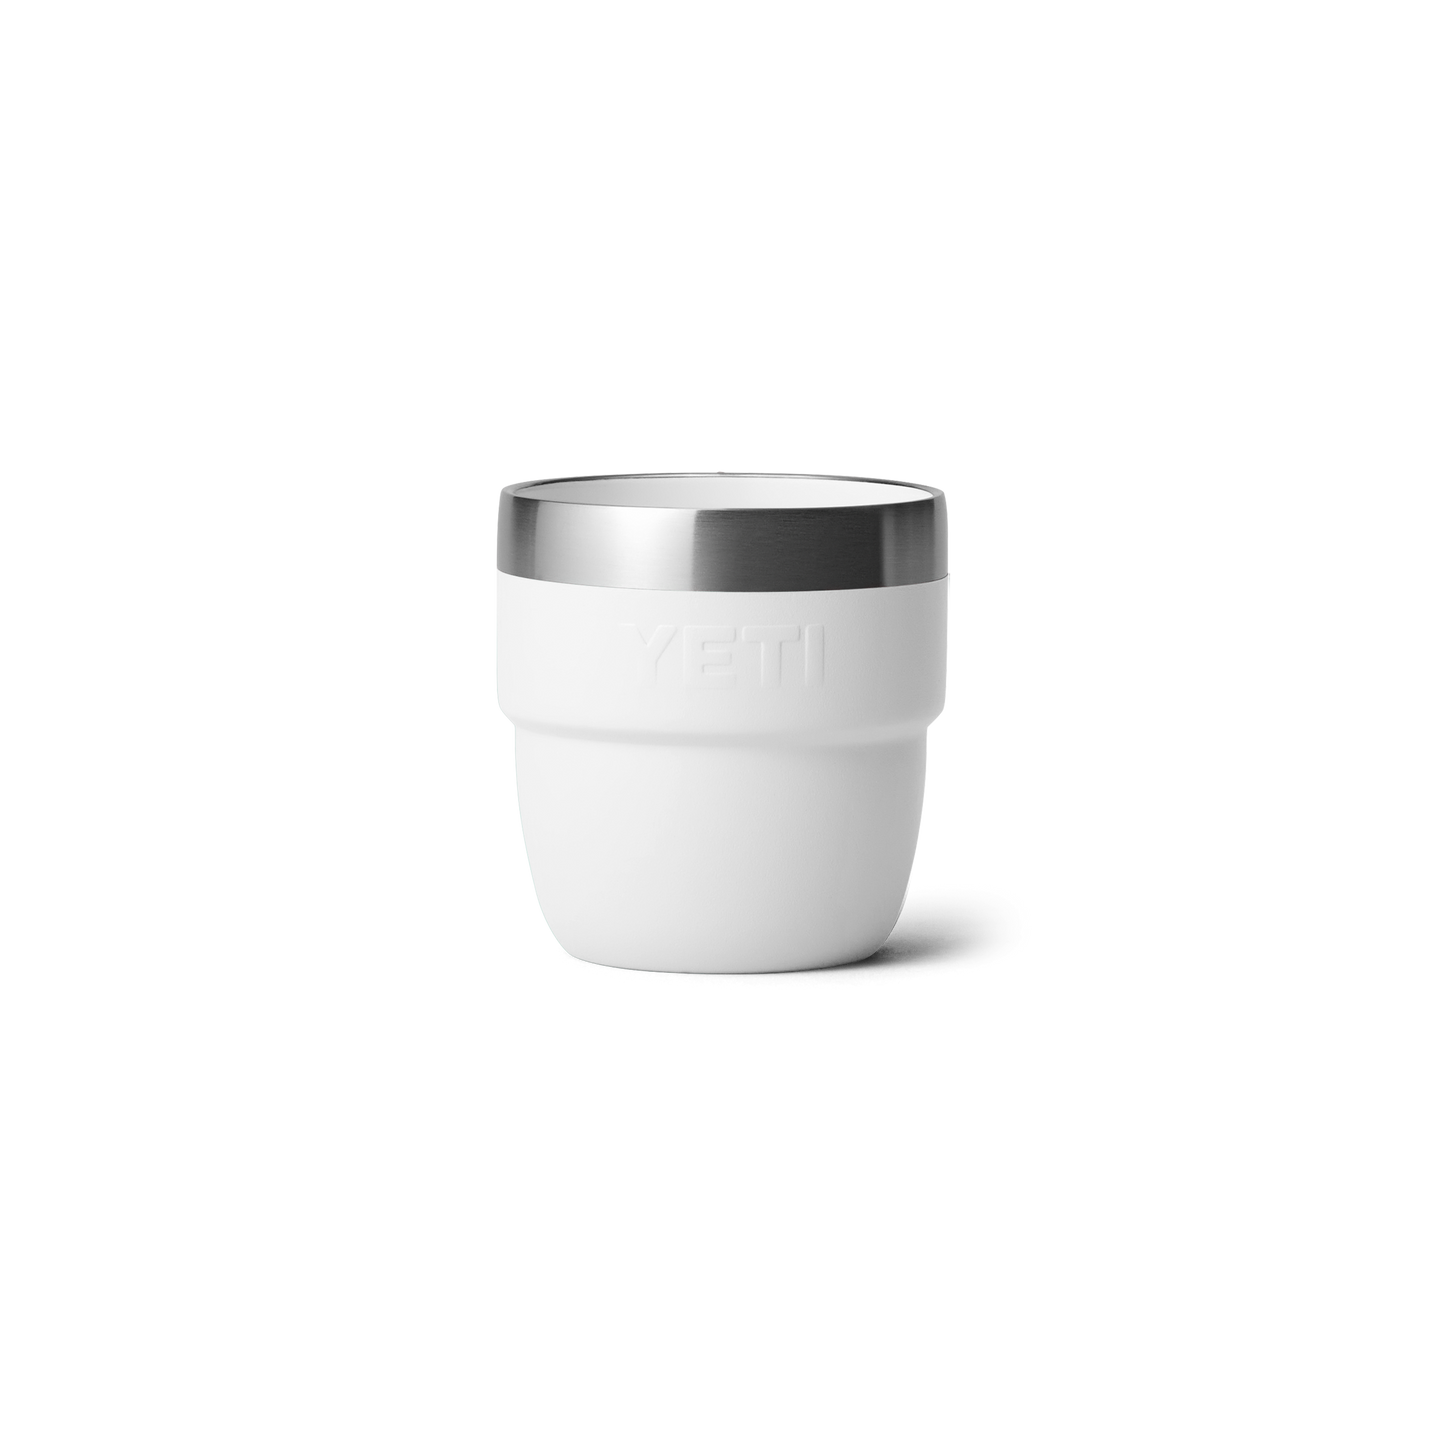 YETI Rambler® 4 oz (118 ml) Stackable Cups White